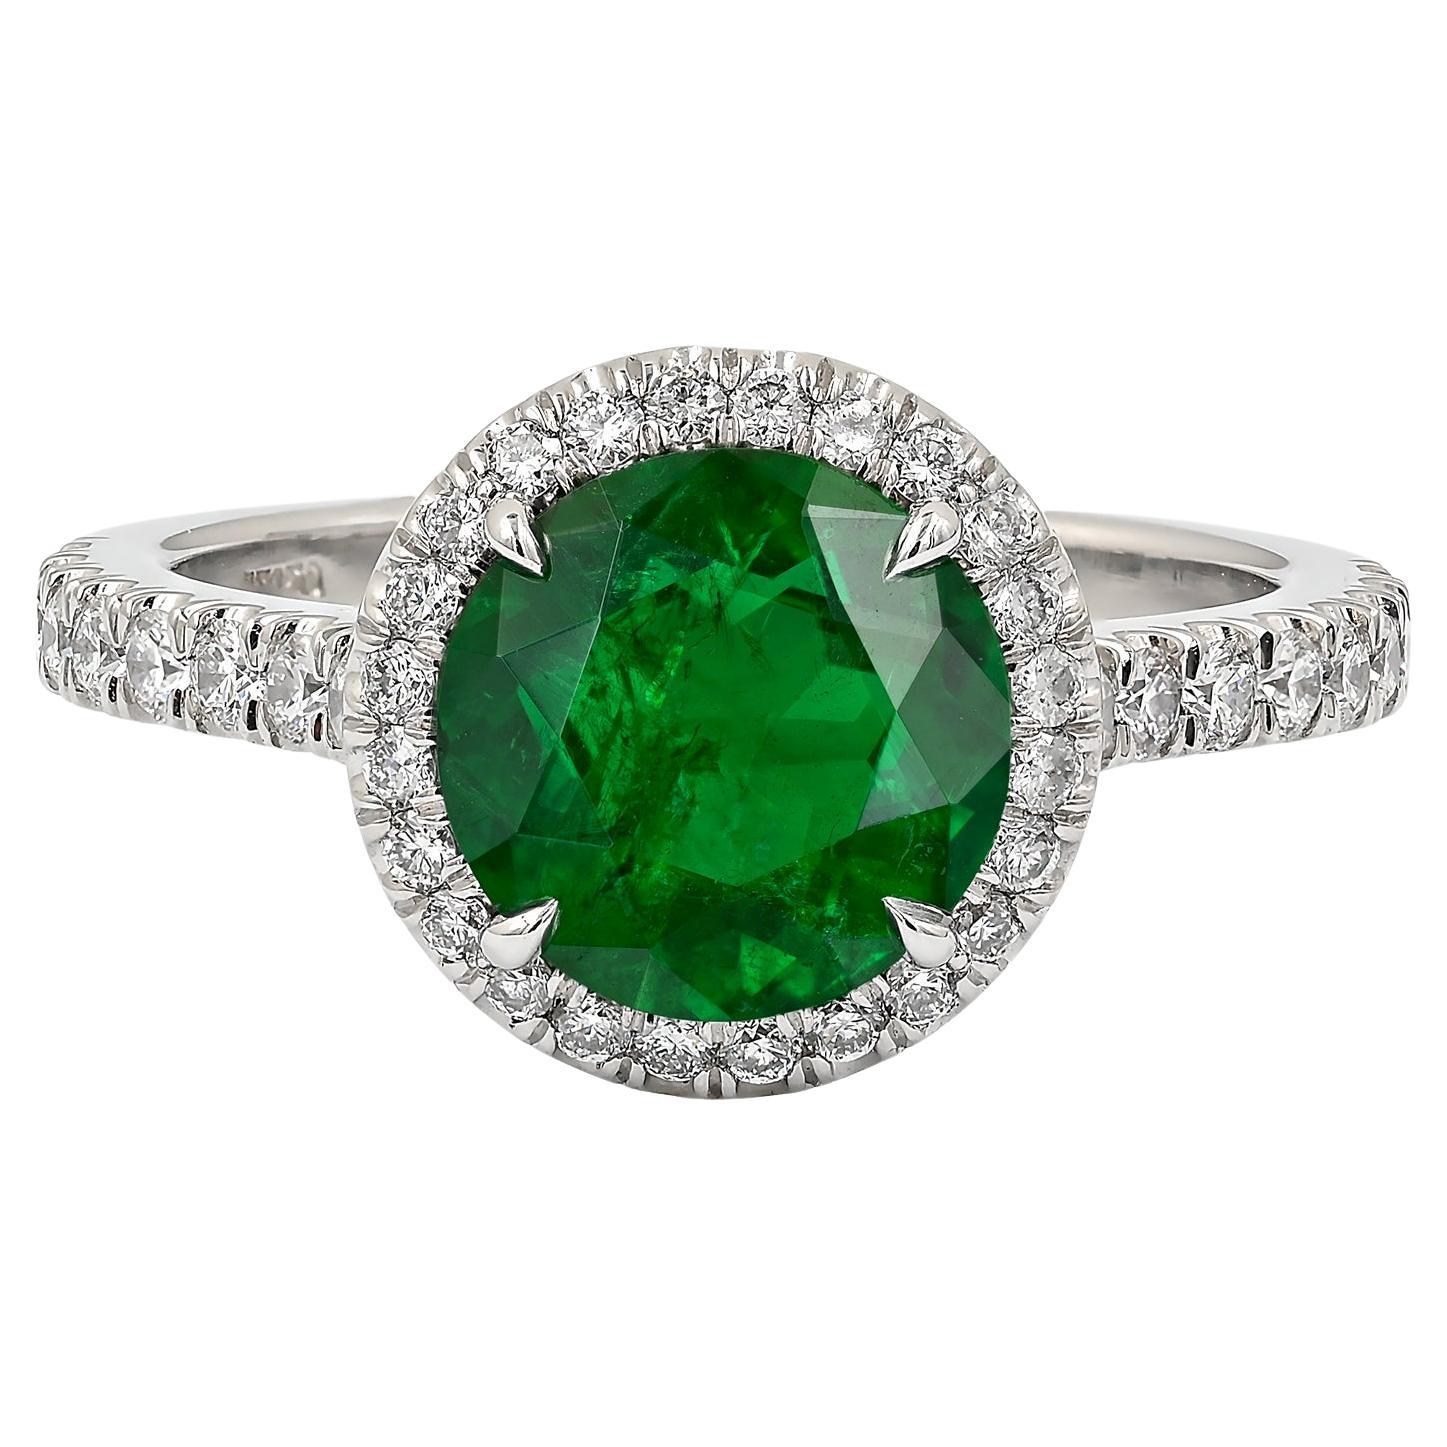 Spectra Fine Jewelry GRS Certified 1.95 Carat Emerald Diamond Cocktail Ring